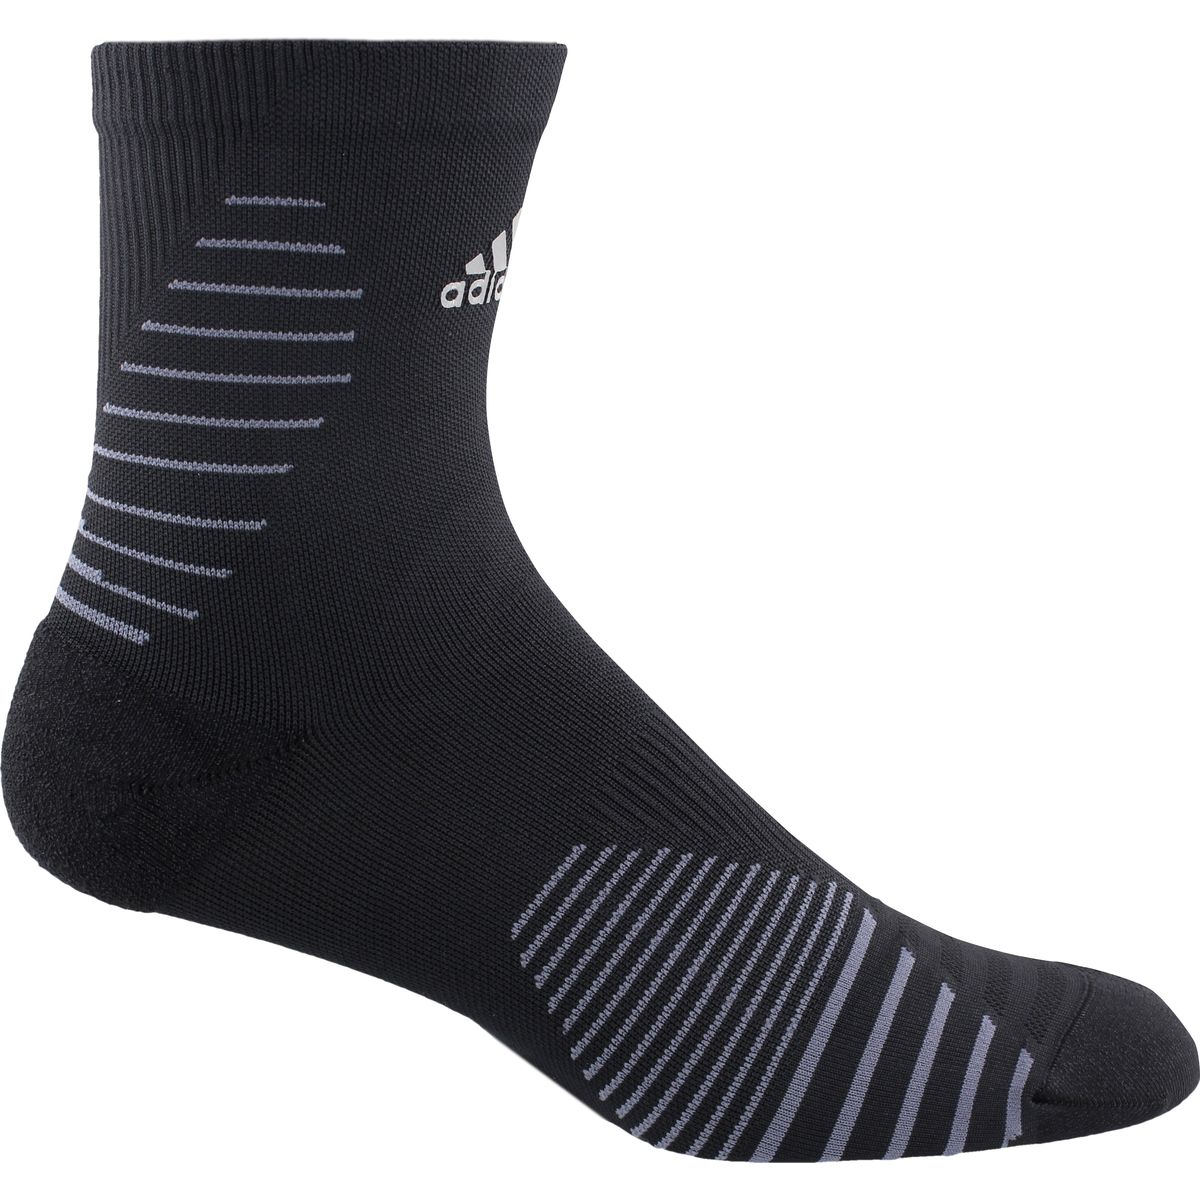 Adidas Outdoor Running Single Mid Crew Sock | Backcountry.com